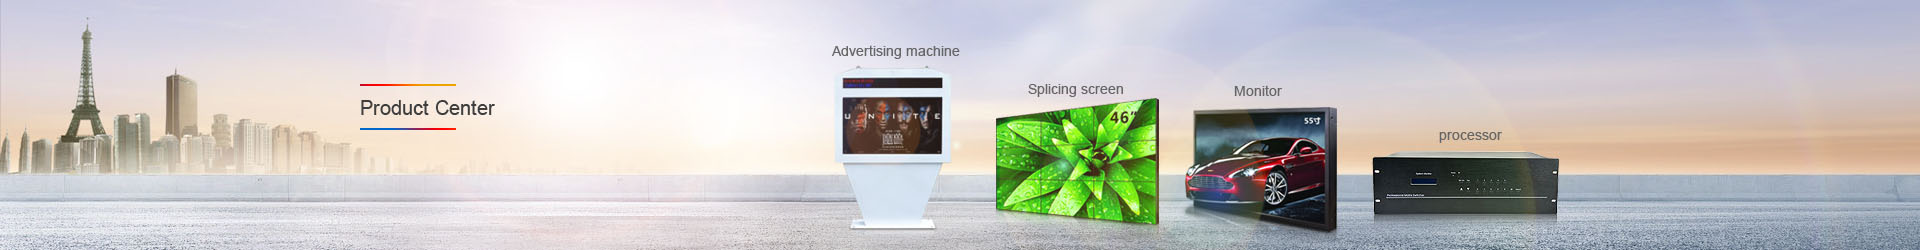 wall-mounted advertising machine